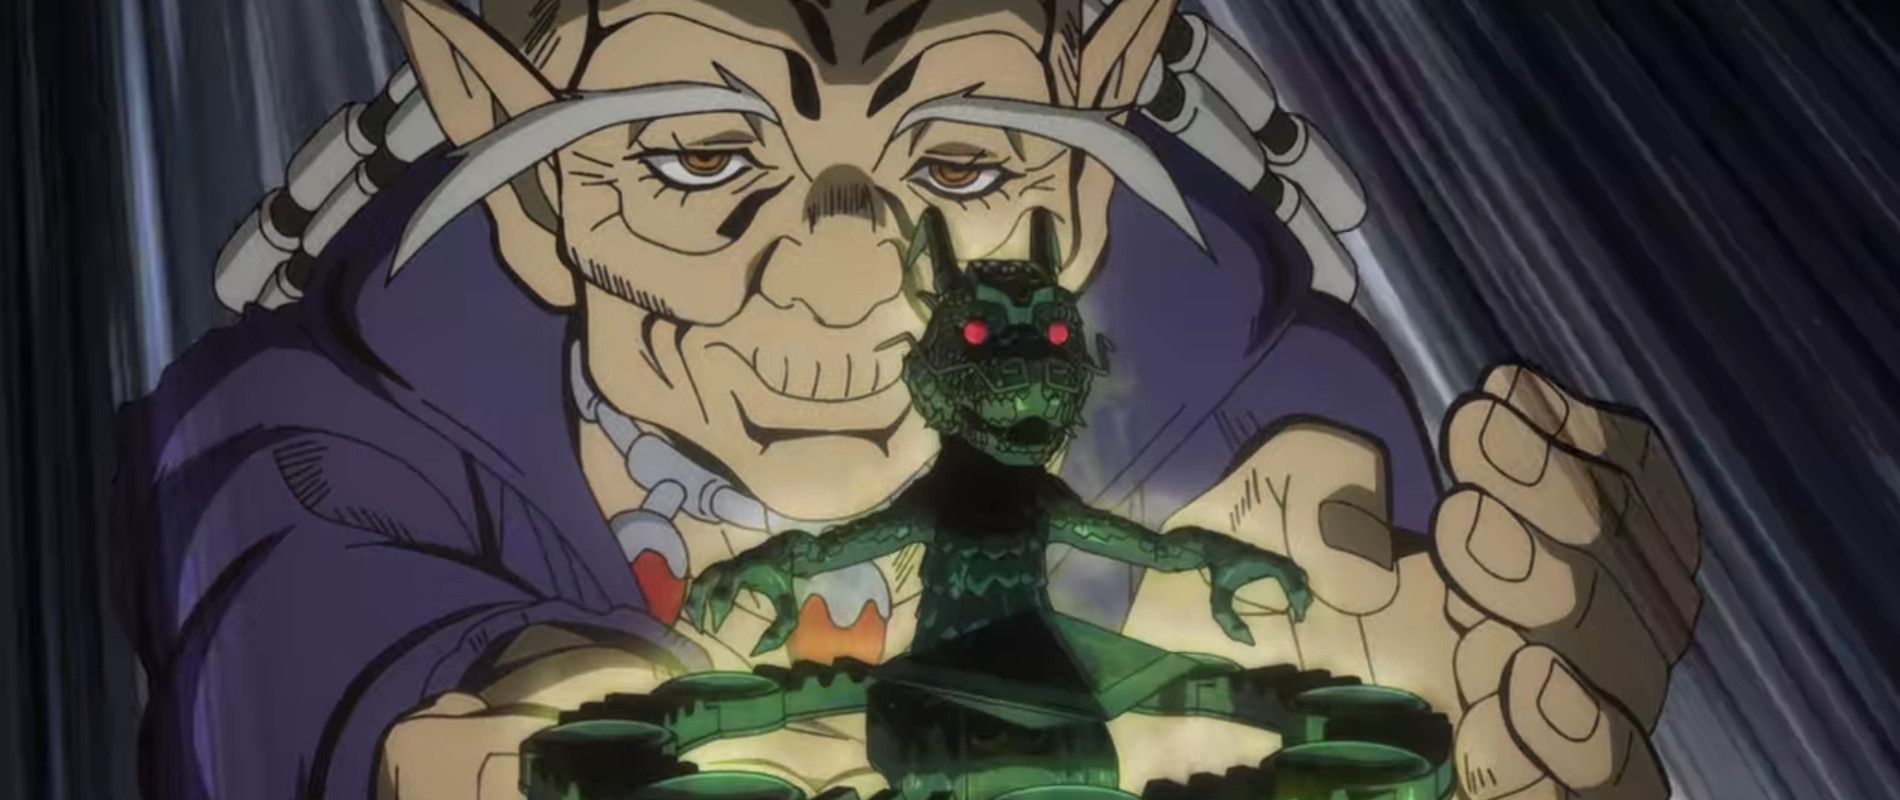 Kenzou looks down at a green dragon-type figure in JoJo's Bizarre Adventure